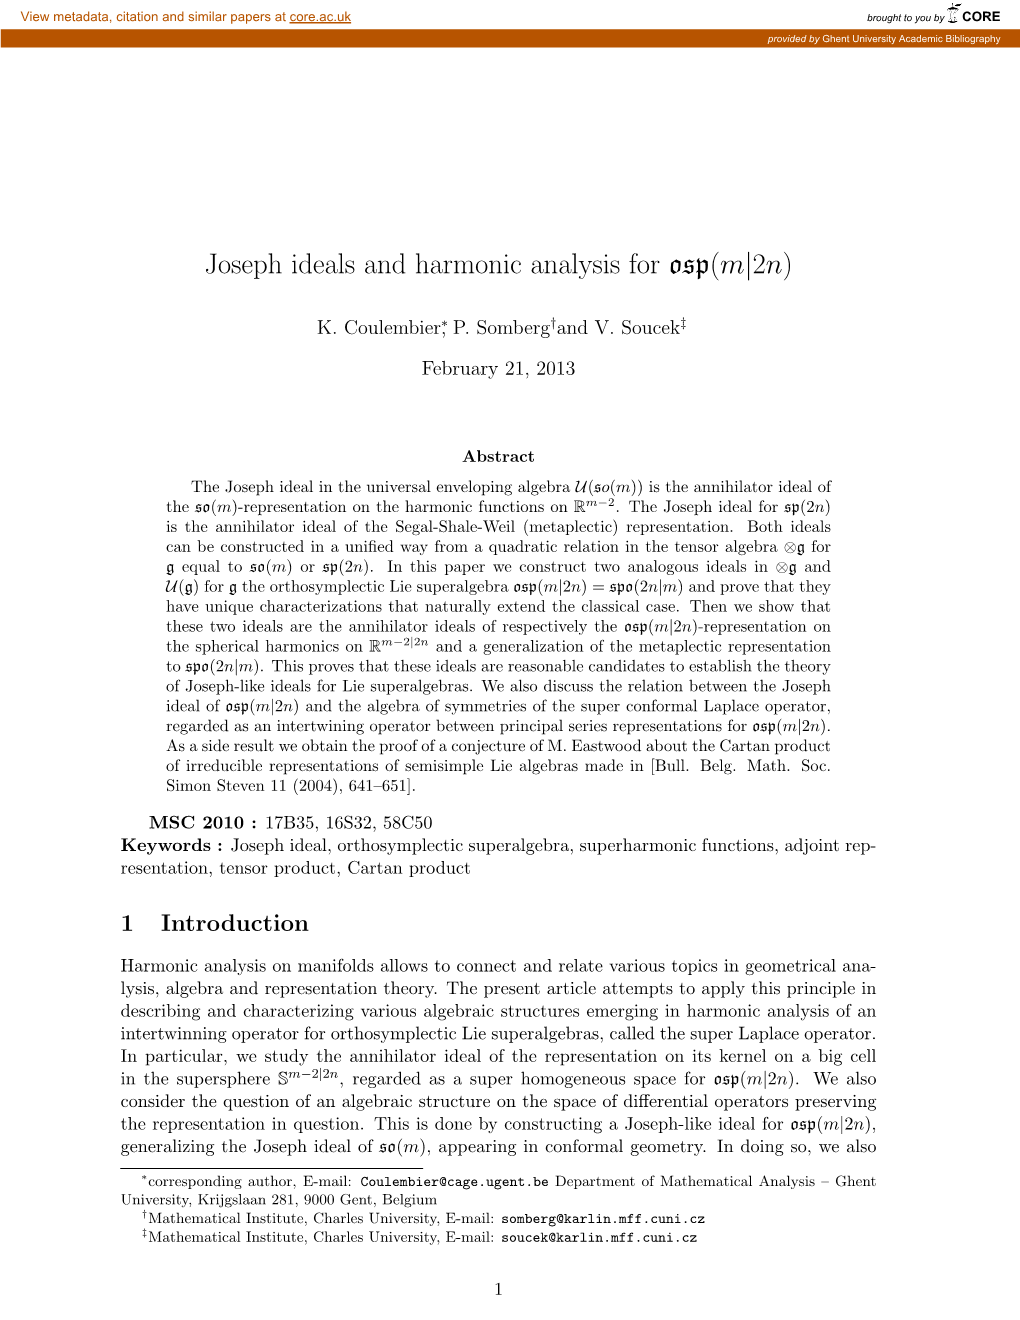 Joseph Ideals and Harmonic Analysis for Osp(M|2N)